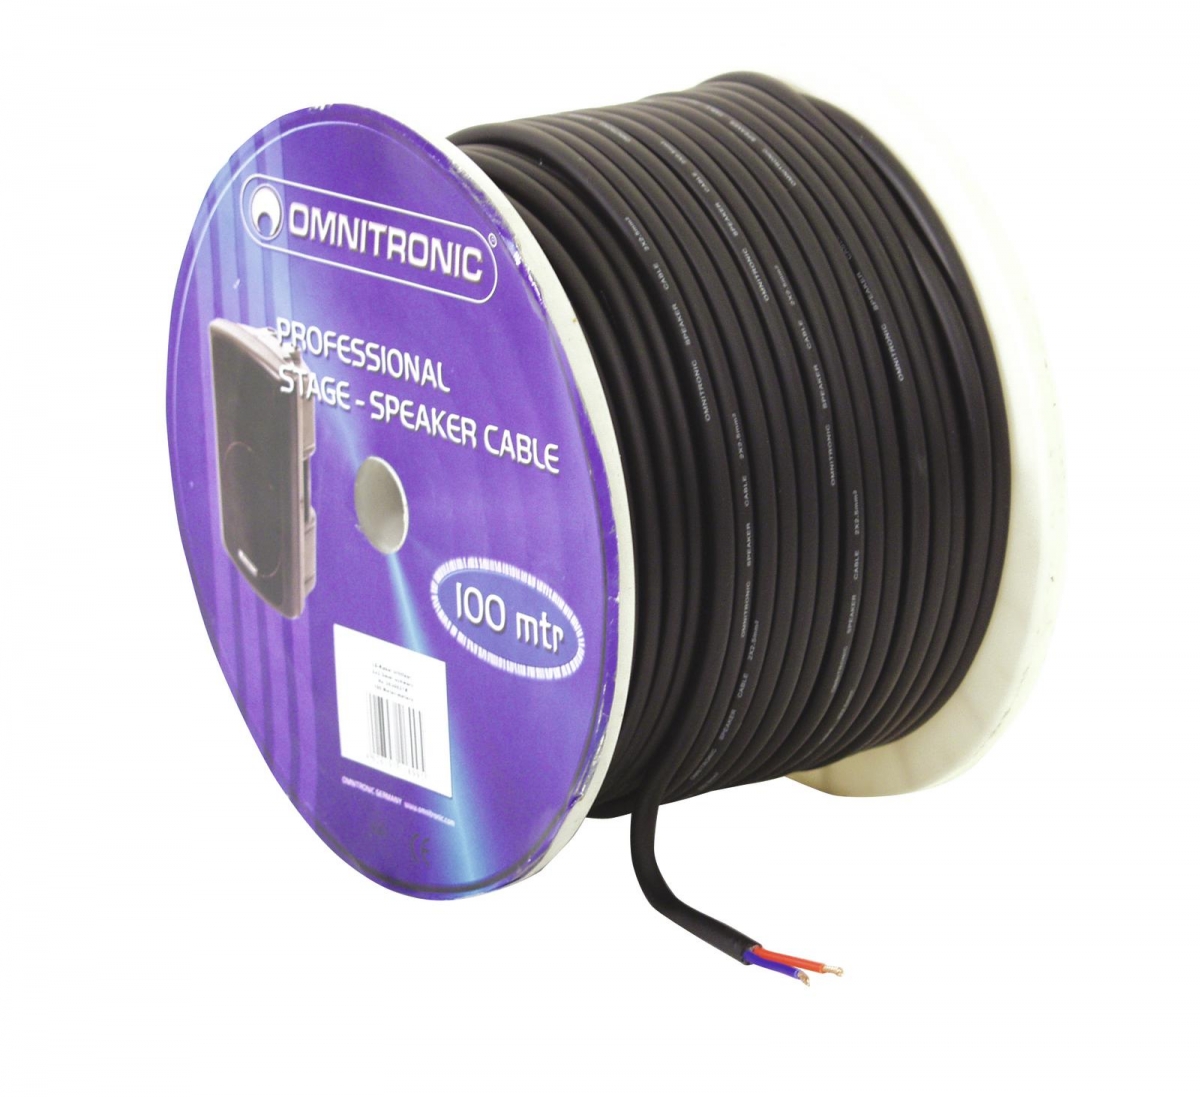 OMNITRONICSpeaker cable 2x2.5 50m bk durable